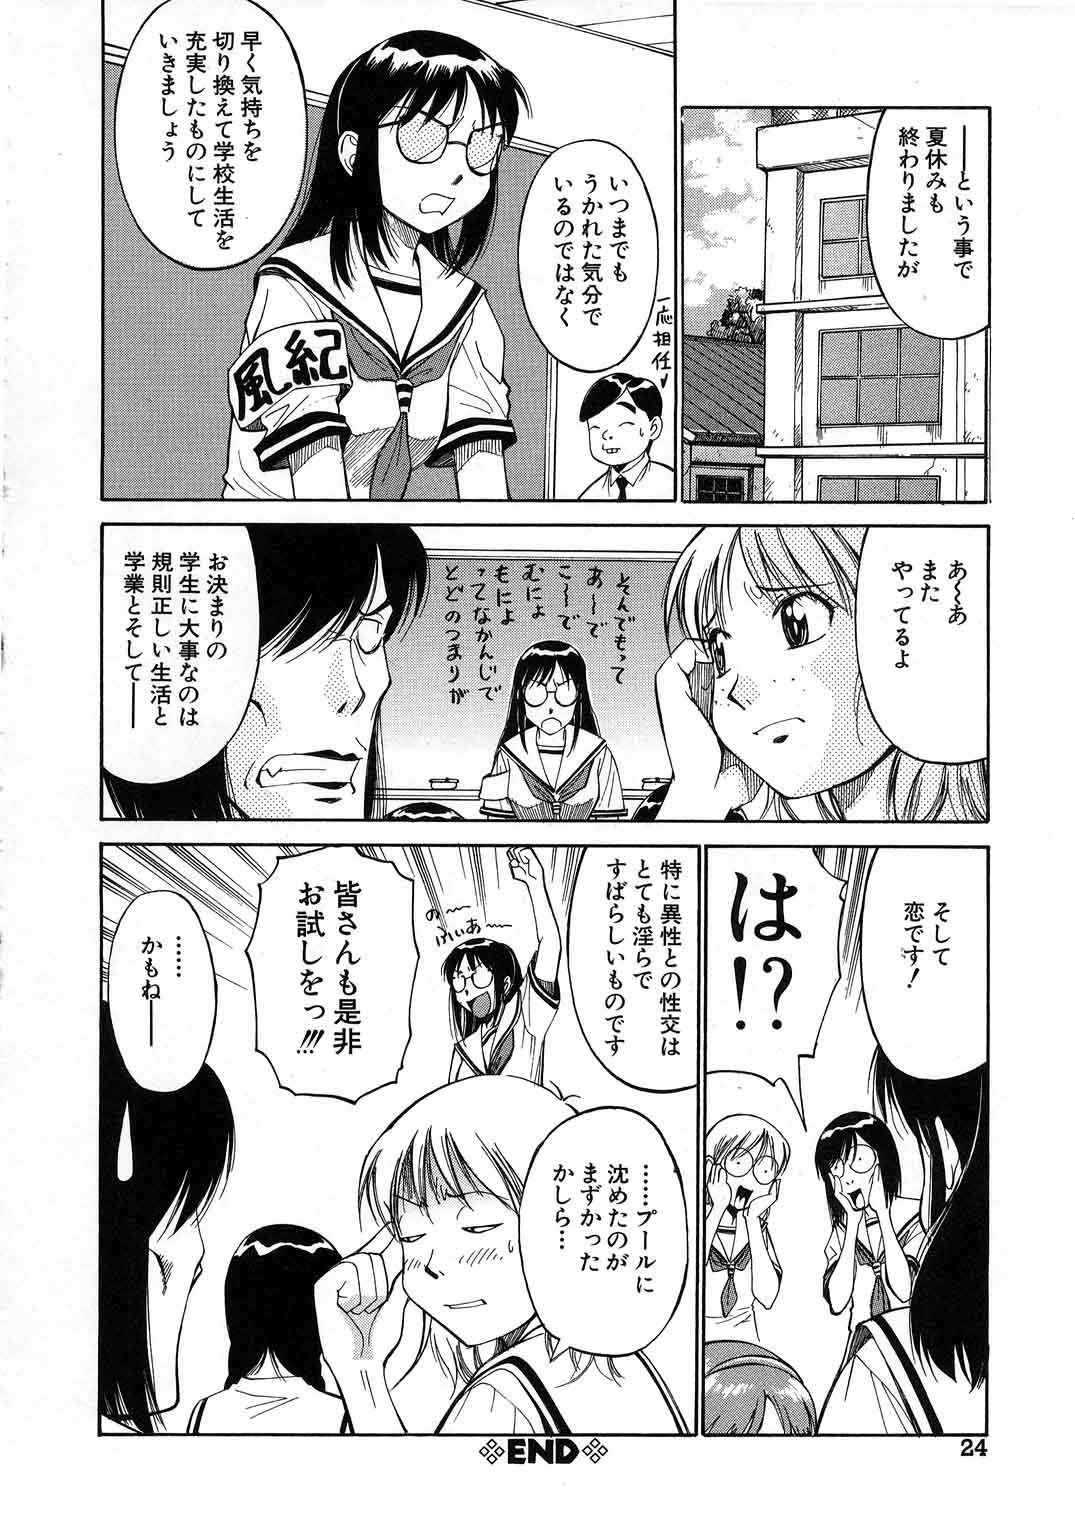 [Dai25 Hoheishidan] Navy Girls 